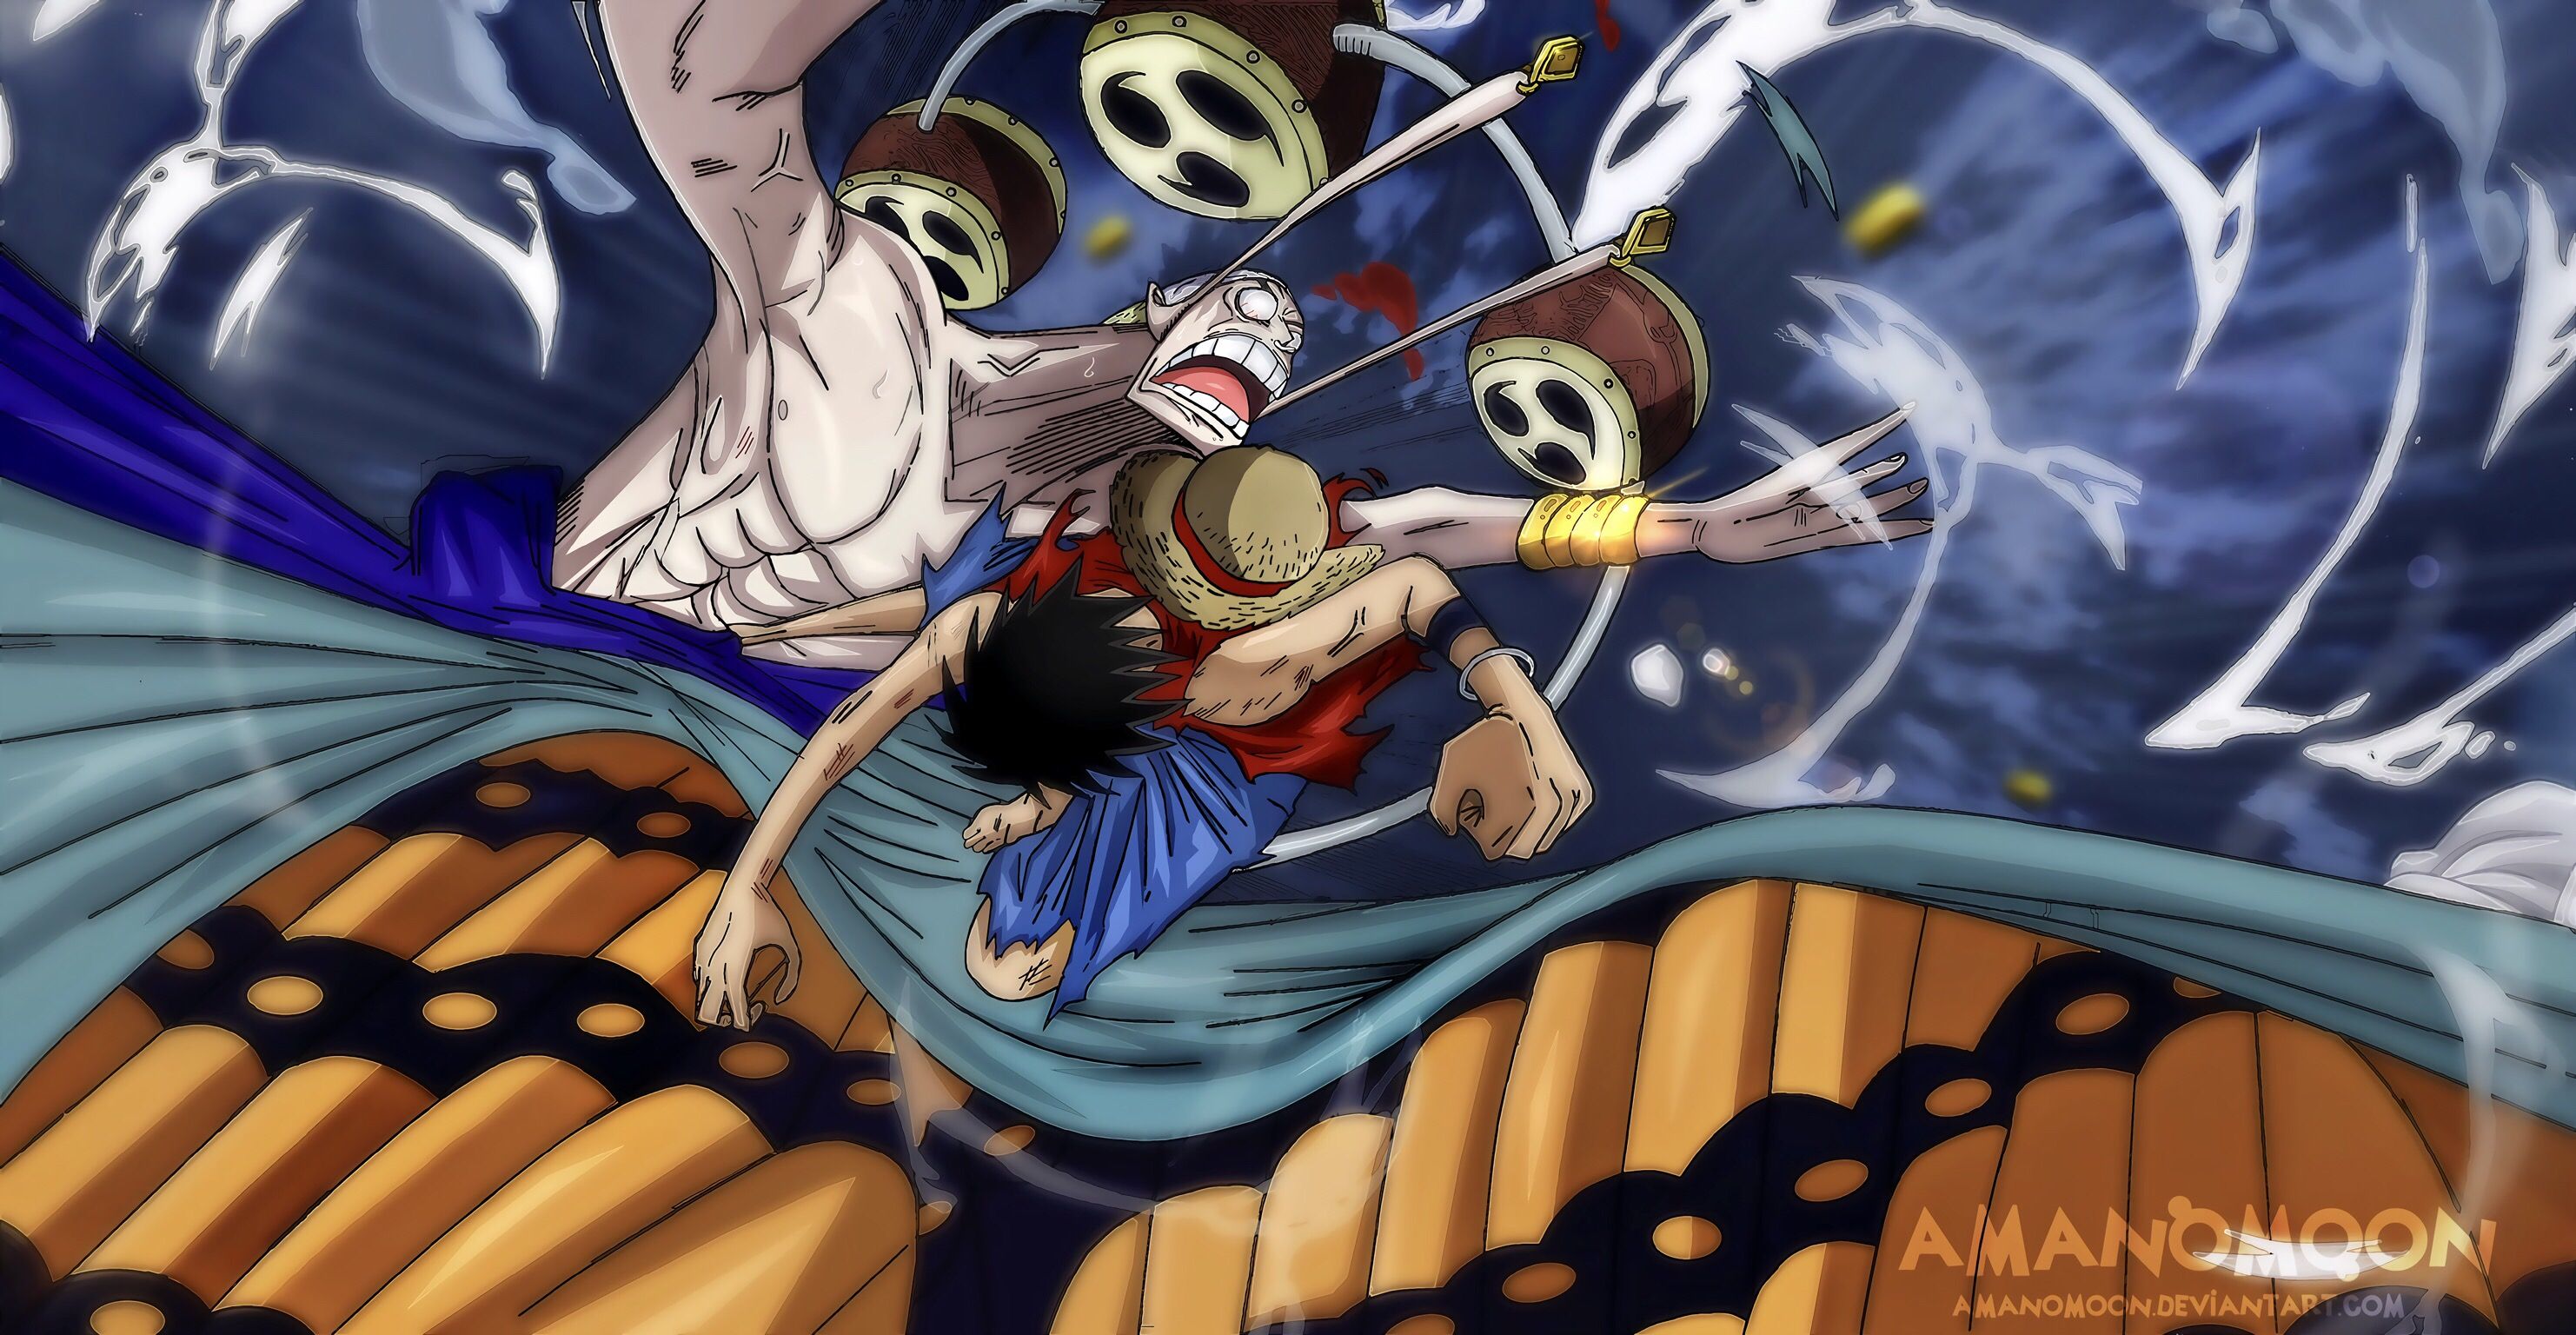 Enel - One Piece by maynardbrian on DeviantArt